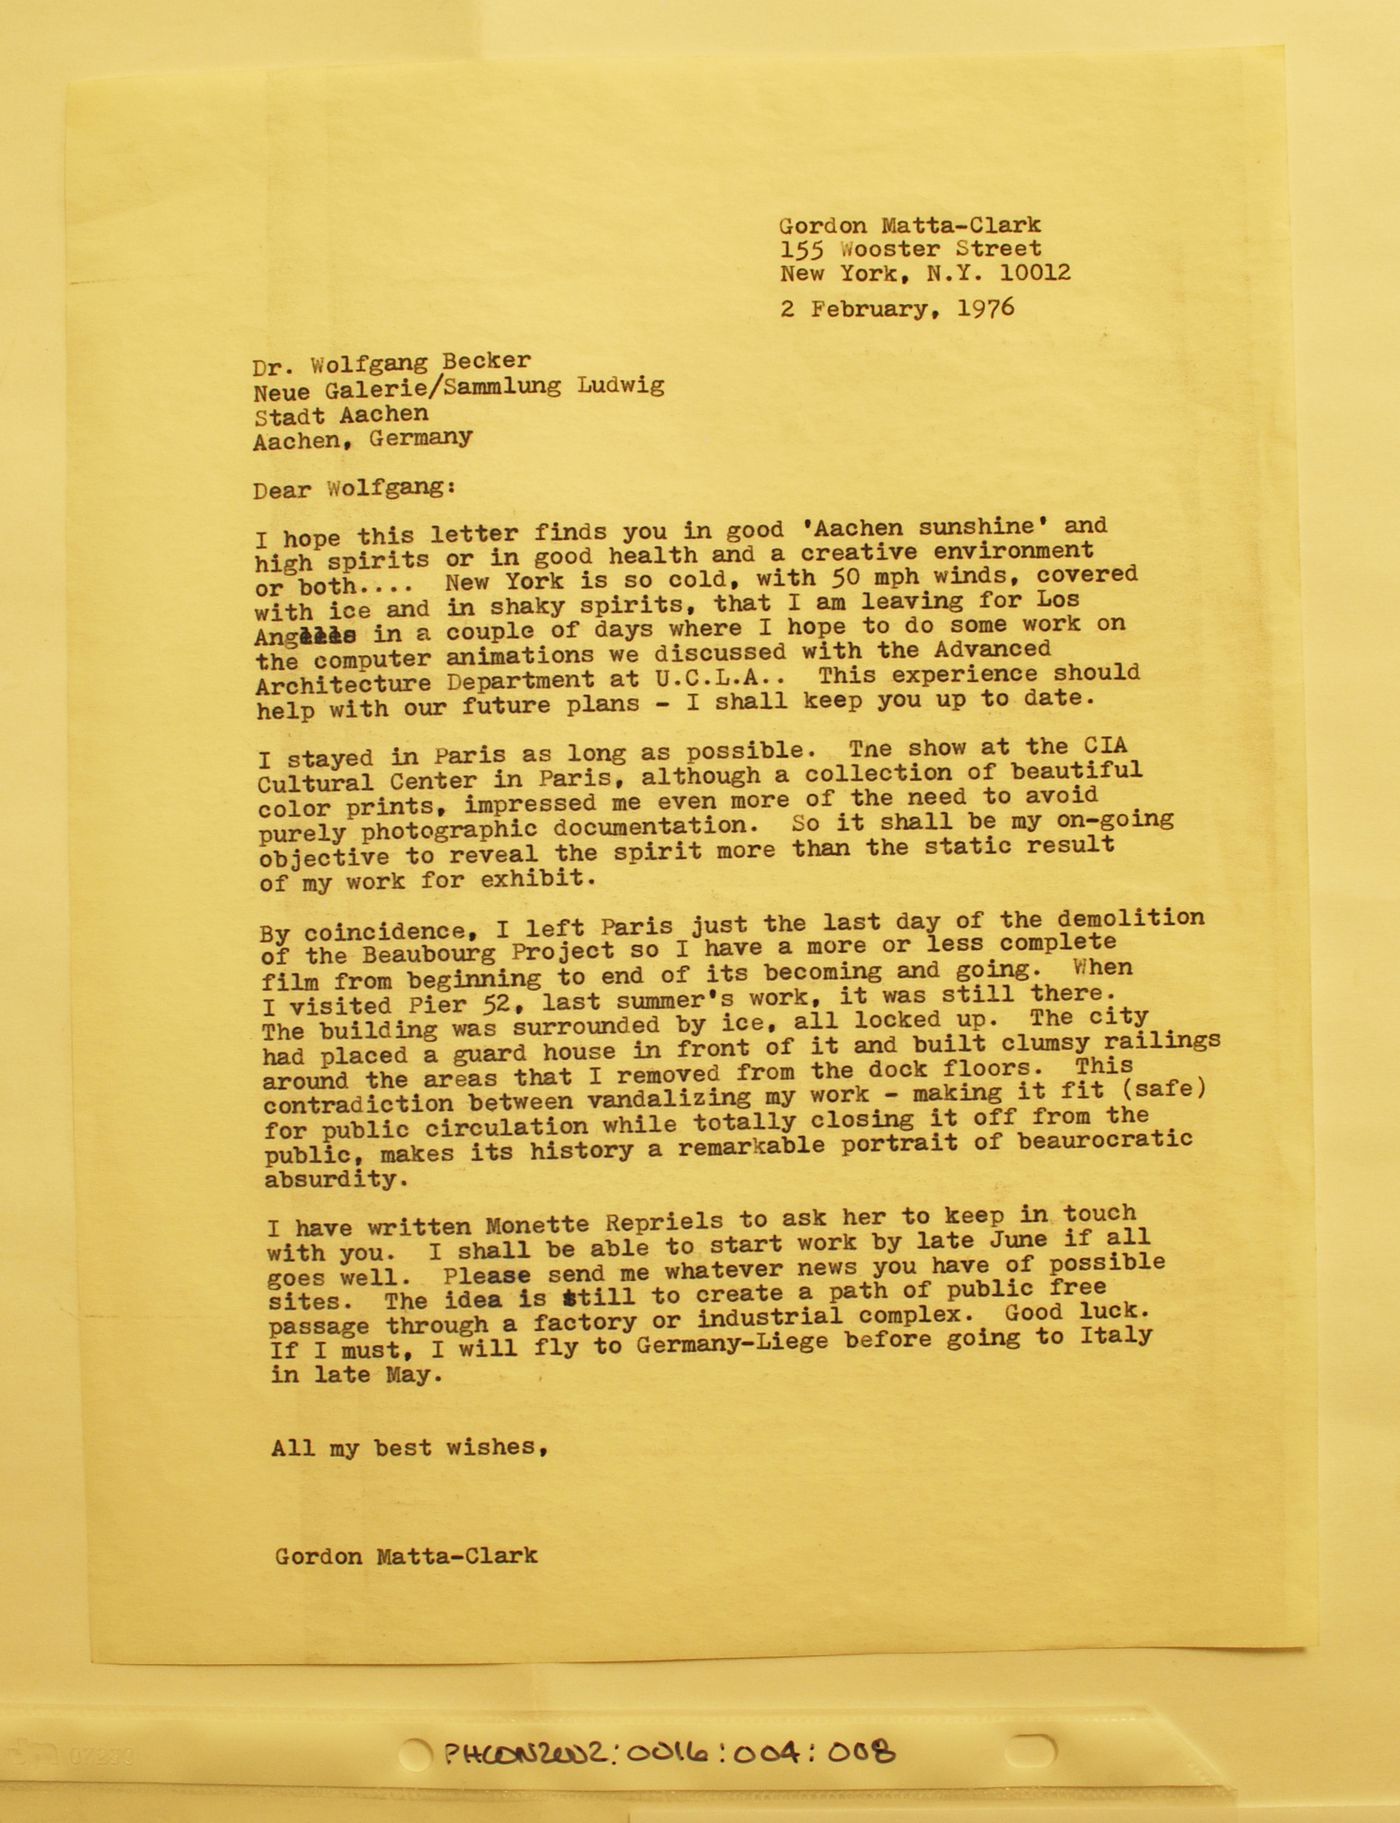 Letter from Gordon Matta-Clark to Dr. Wolfgang Becker